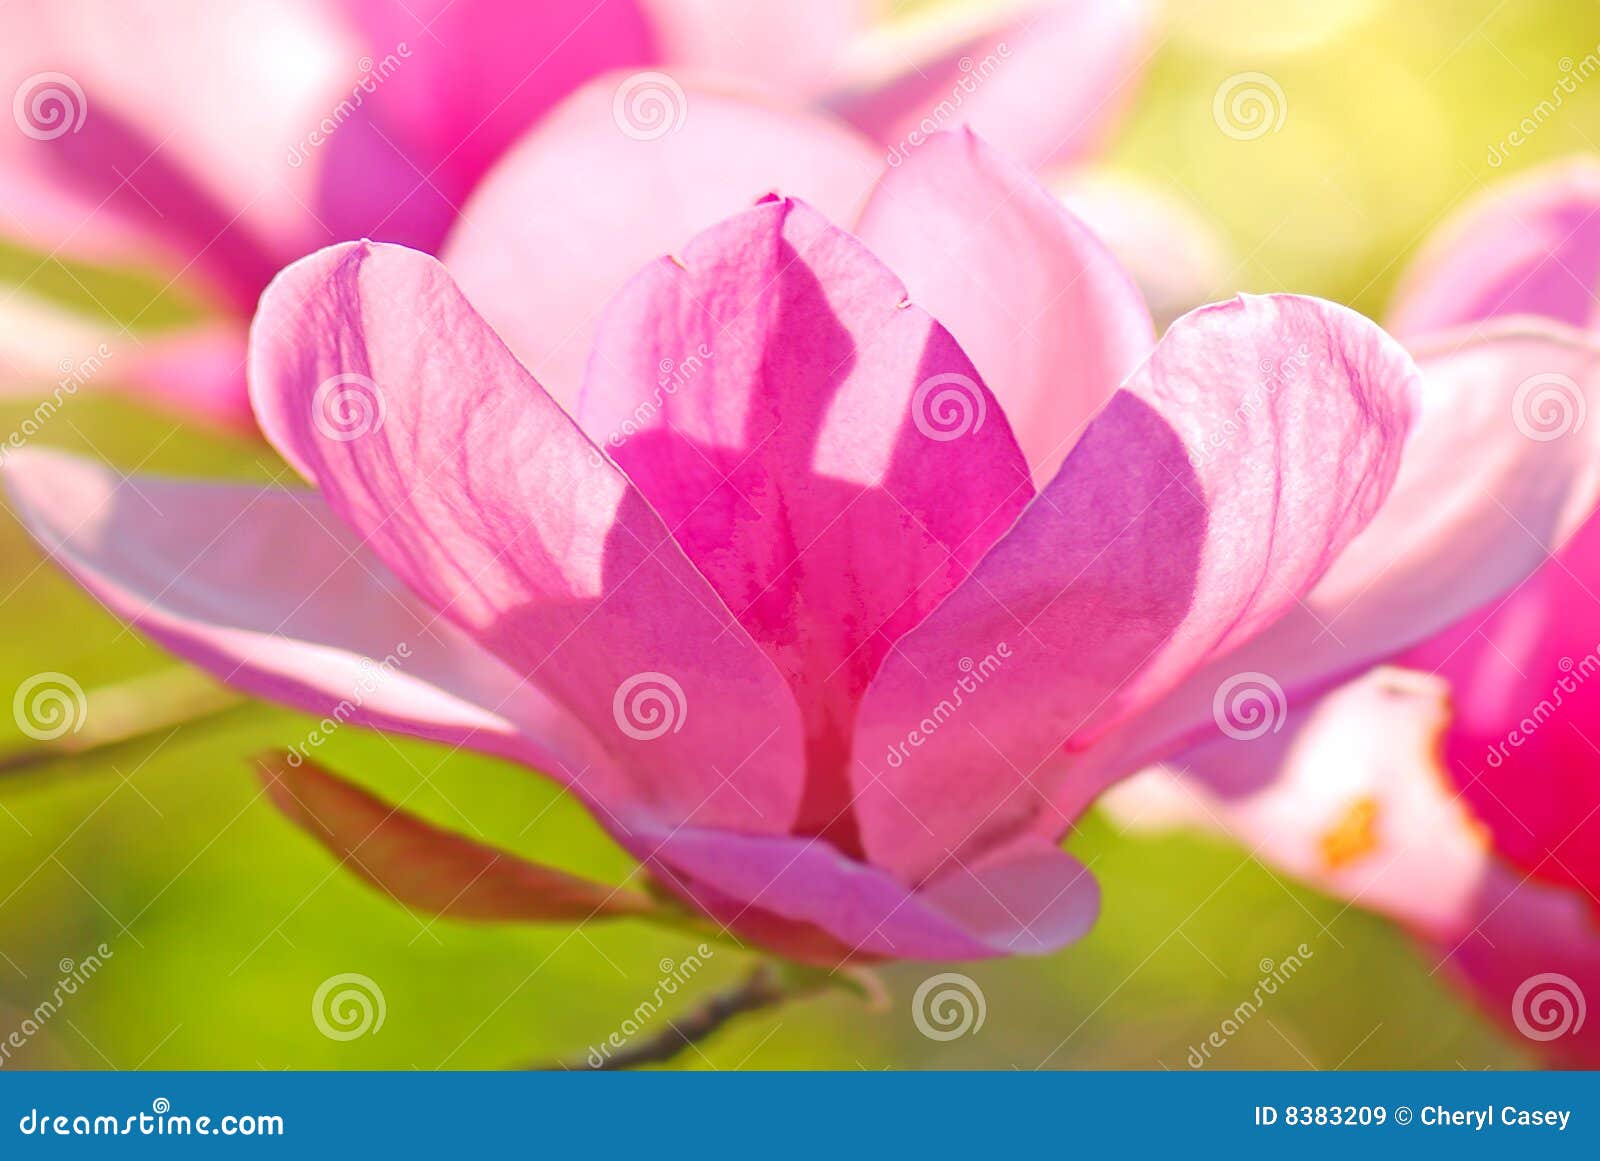 Japanese magnolia stock image. Image of landscaping, purple - 8383209